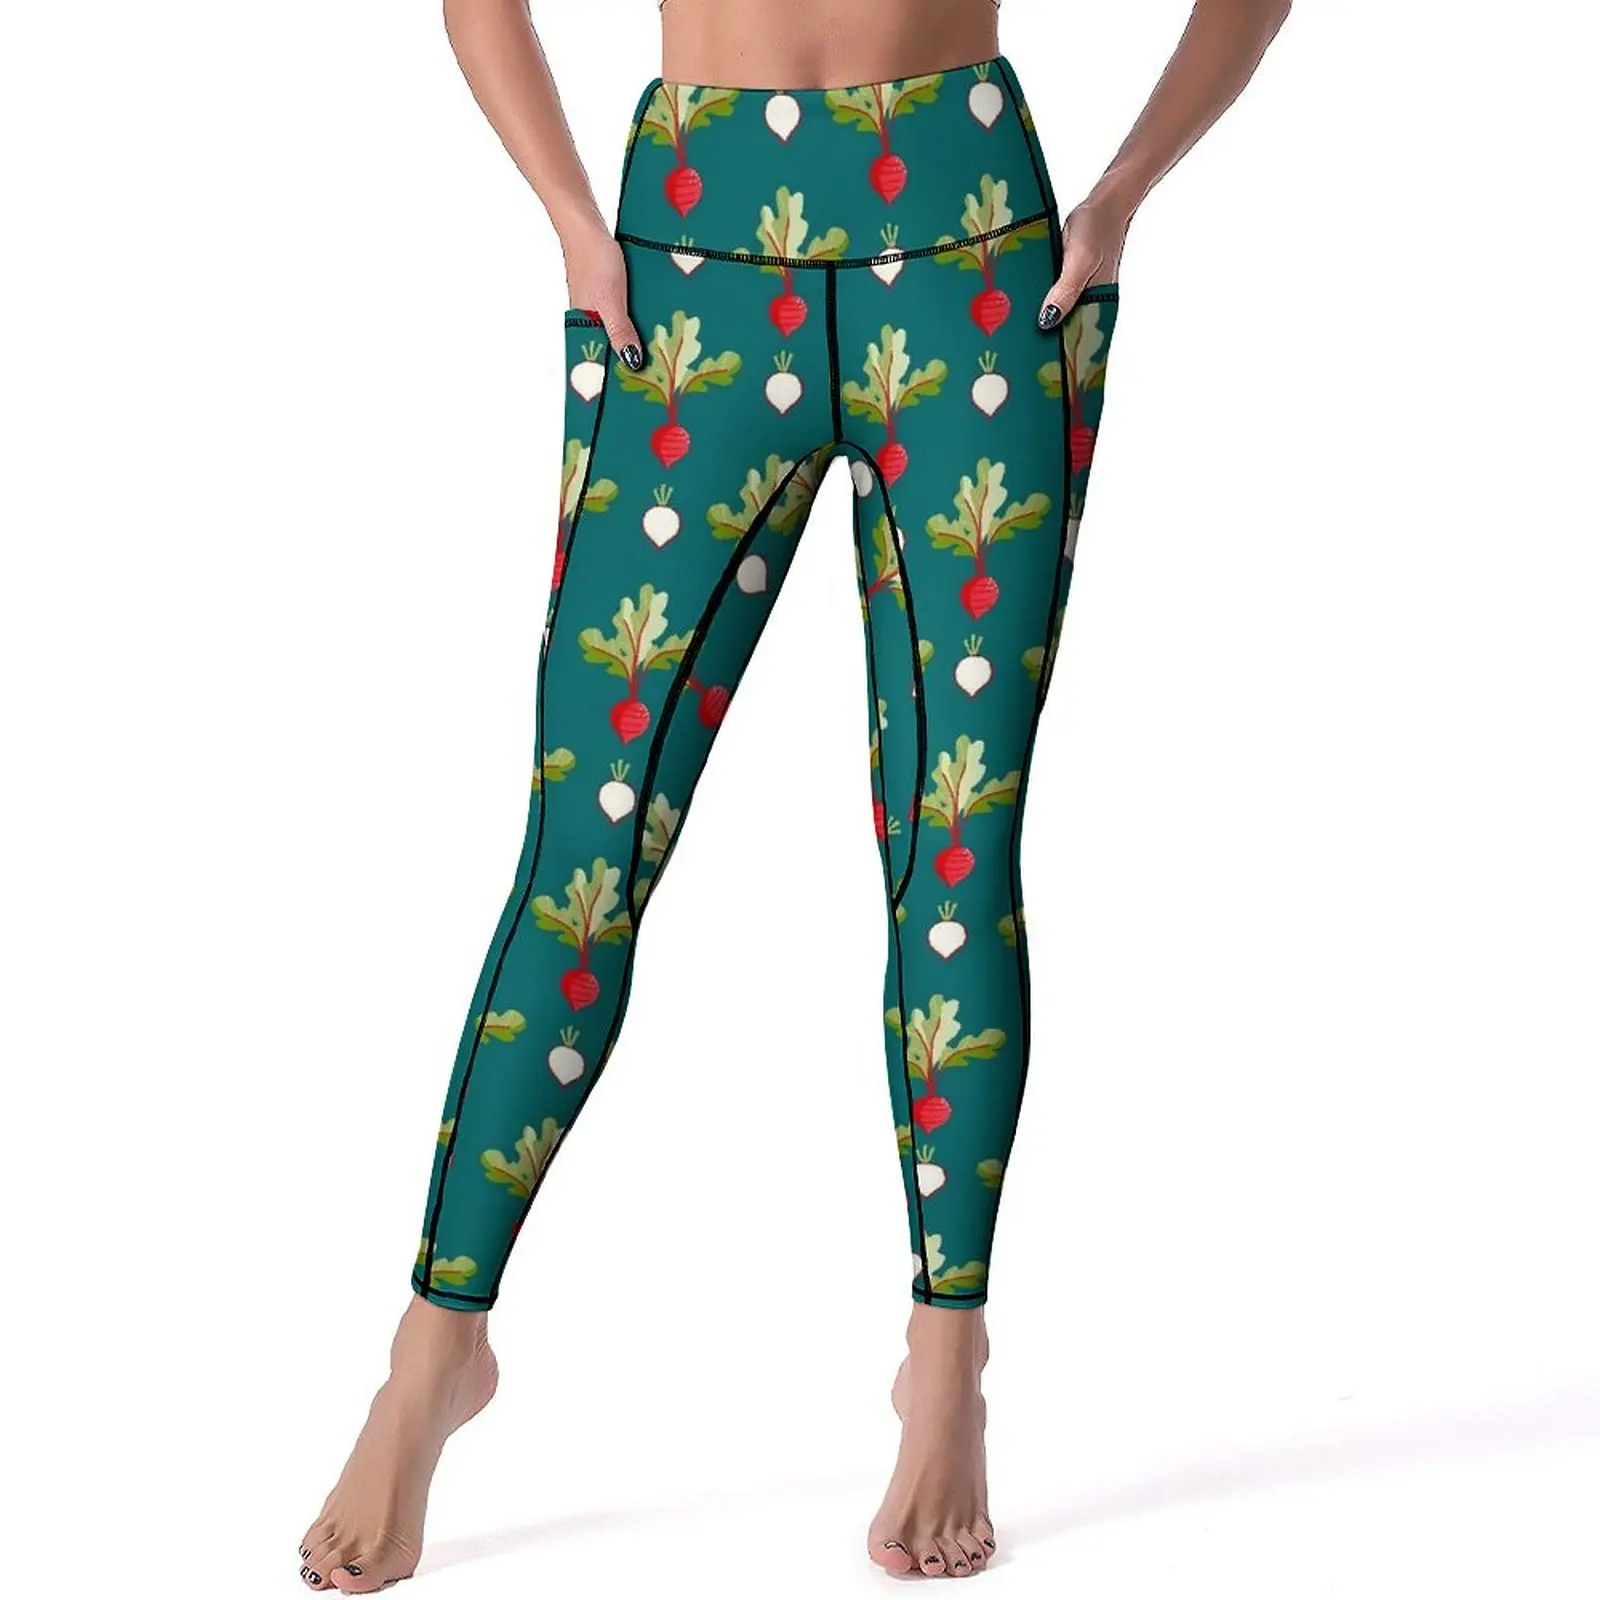 

Radishes Leggings Cute Vegetable Print Gym Yoga Pants High Waist Casual Leggins Elastic Graphic Sports Tights Gift